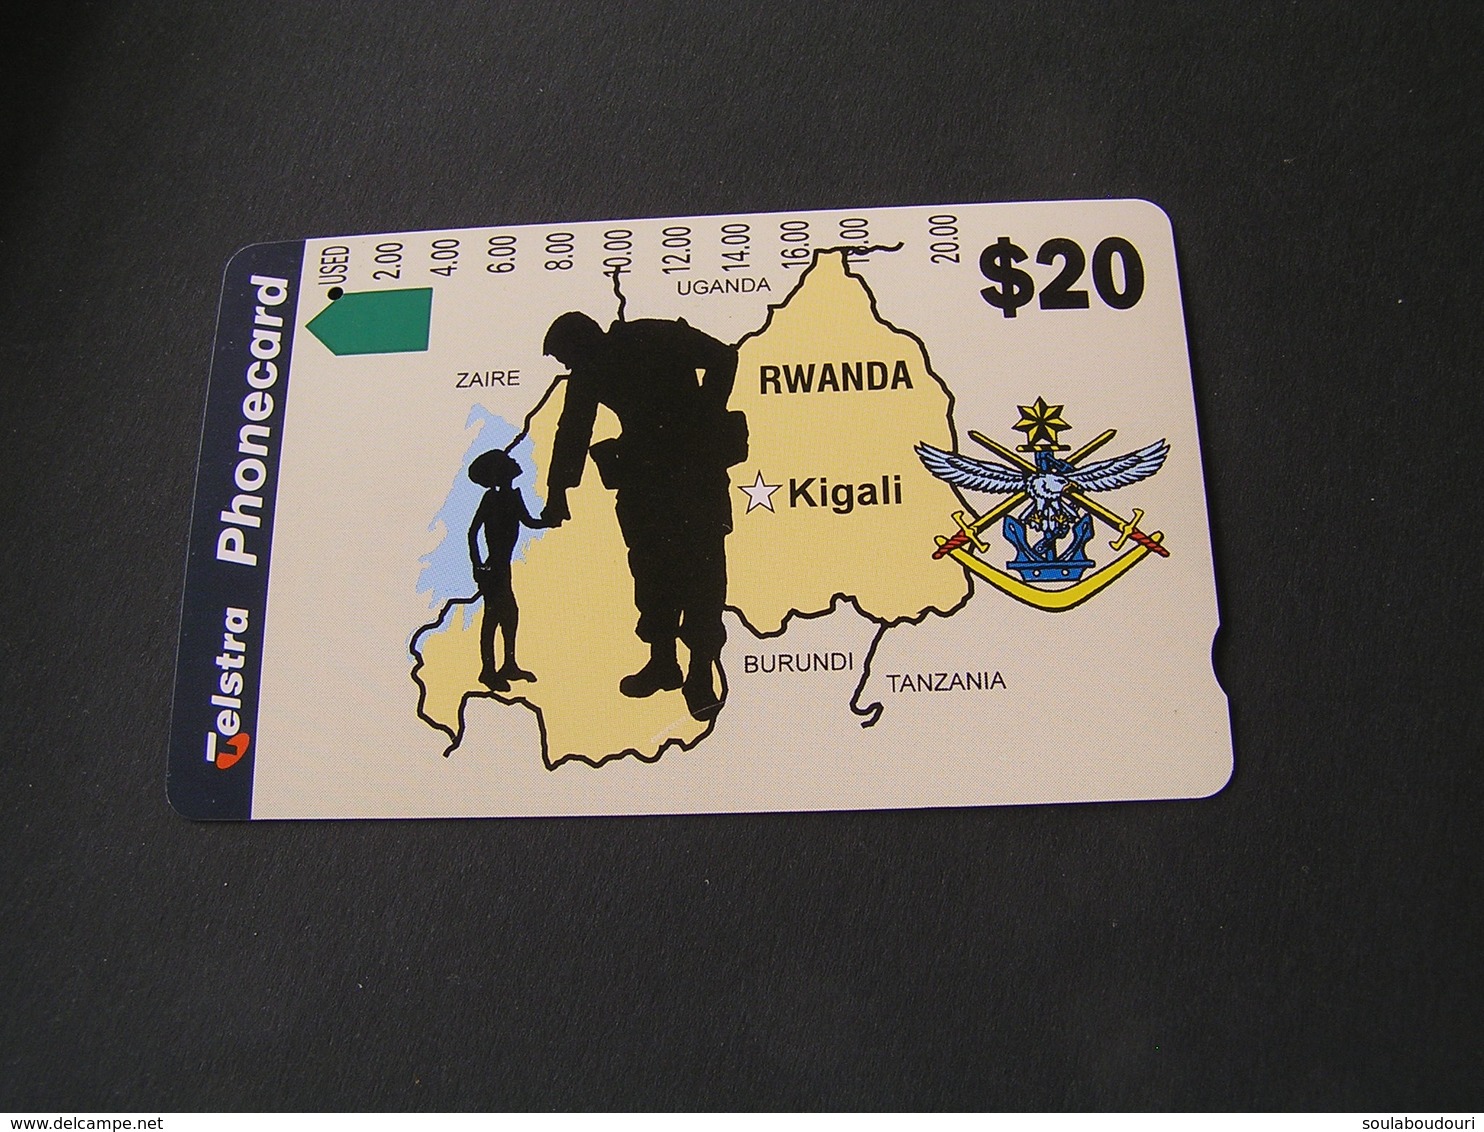 RWANDA REF MV CARDS RWA-03 20$ - Ruanda